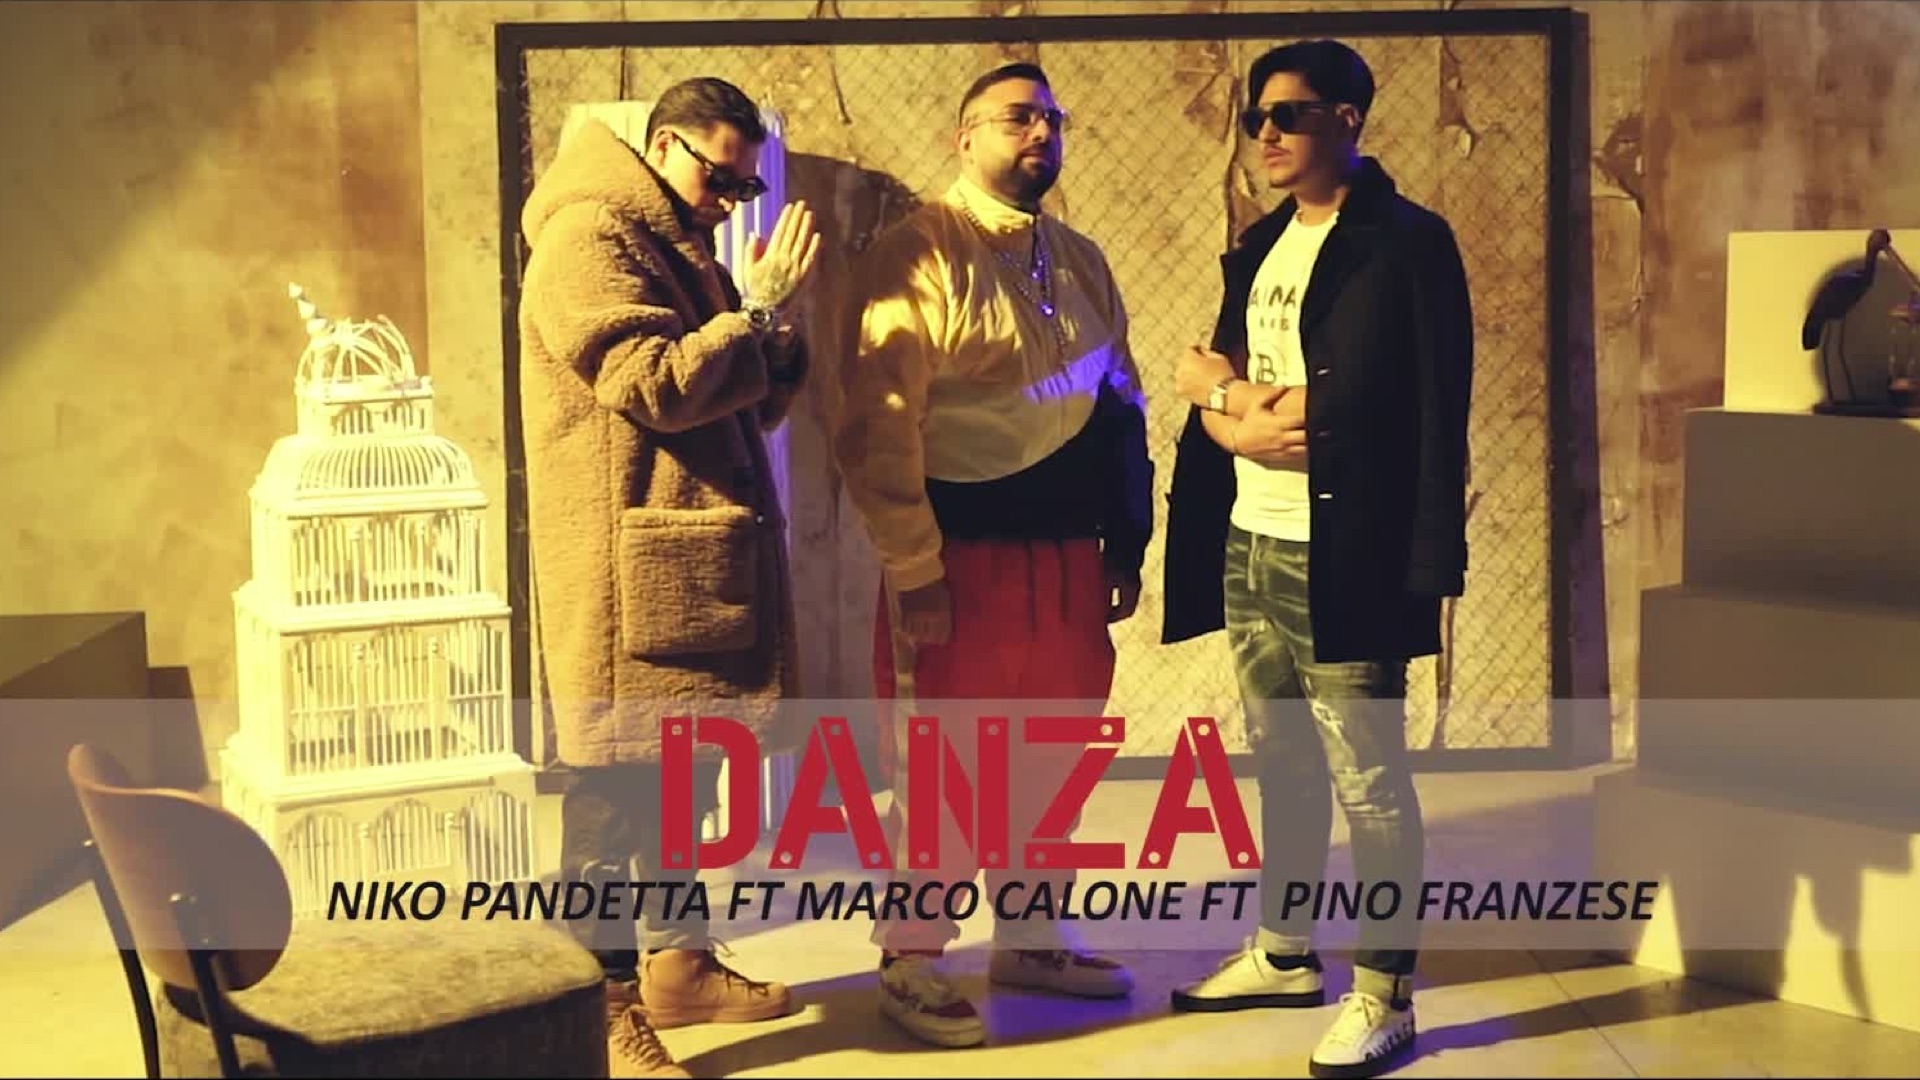 Danza (feat. Marco Calone & Pino Franzese) by Niko Pandetta on Apple Music